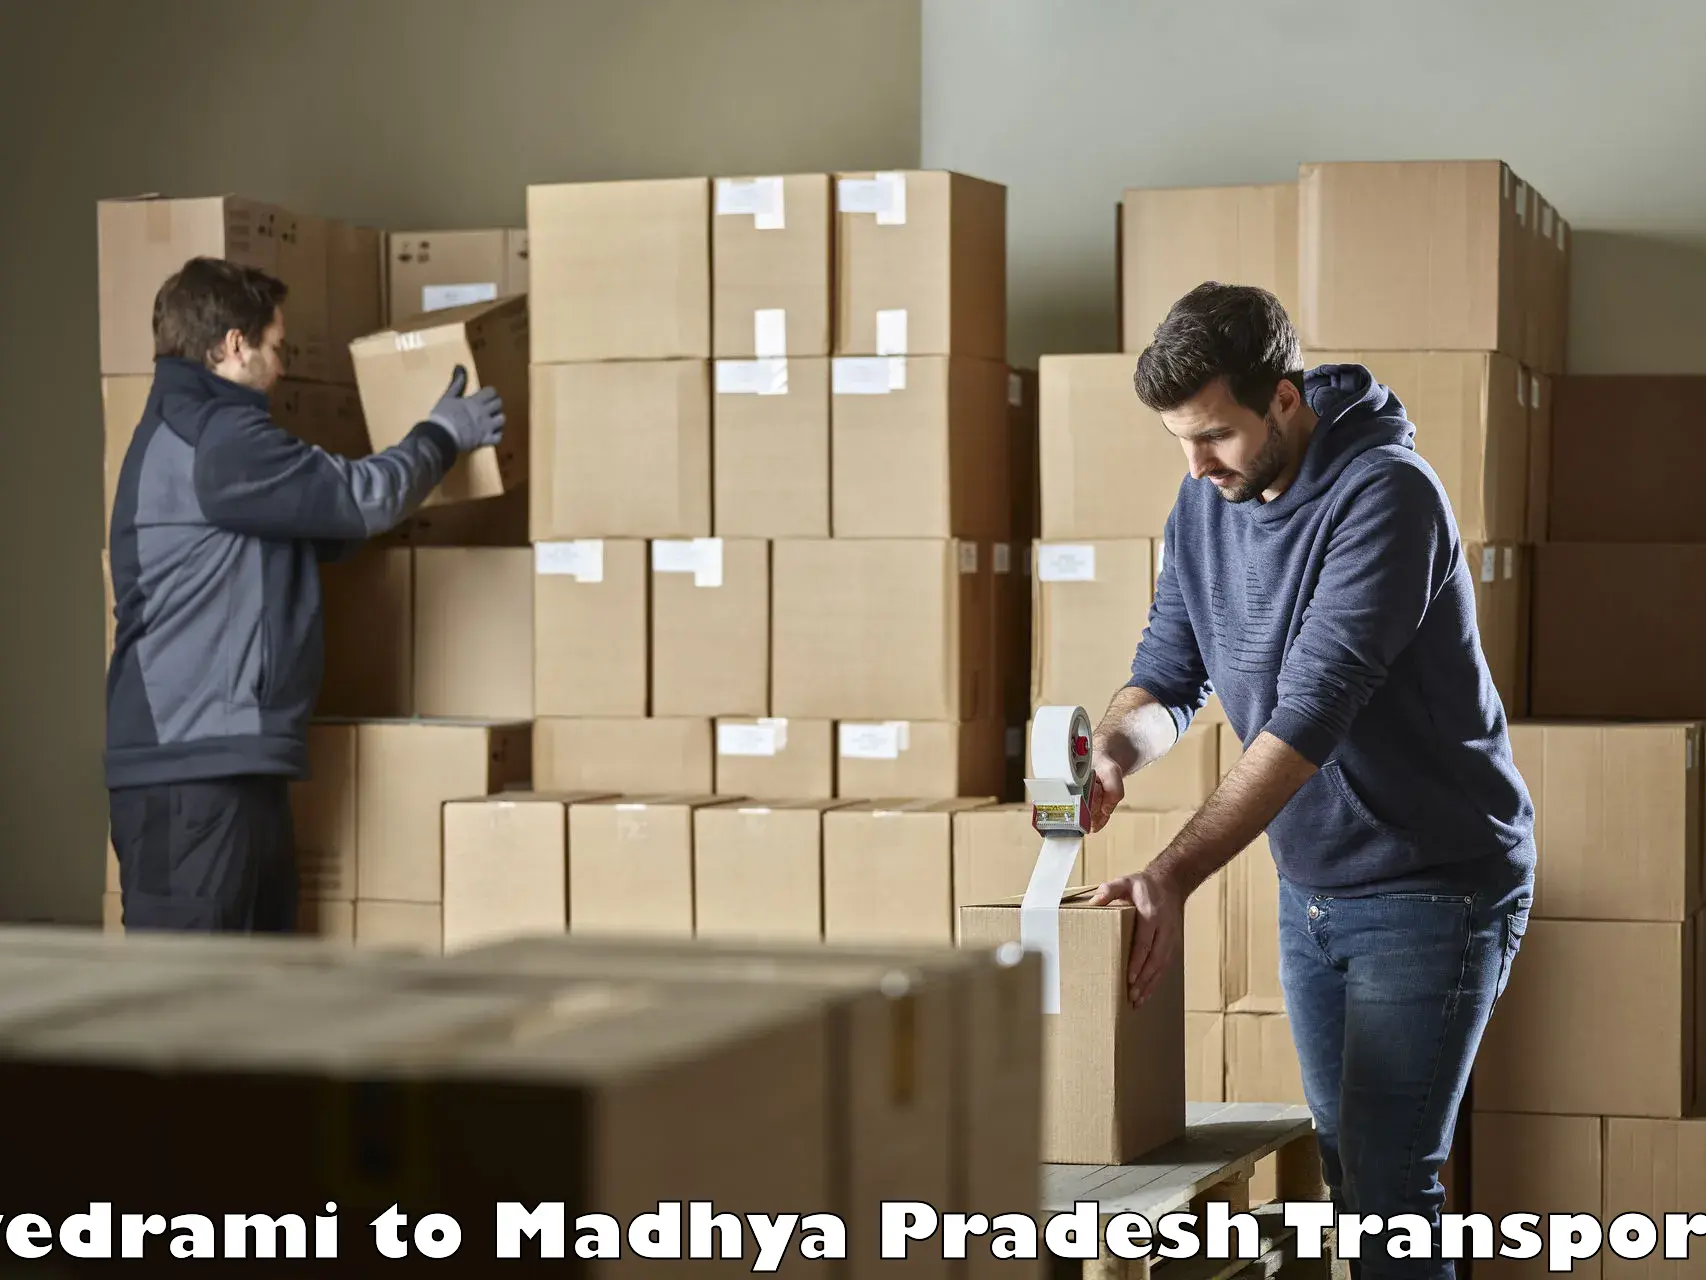 Part load transport service in India in yedrami to Madhya Pradesh